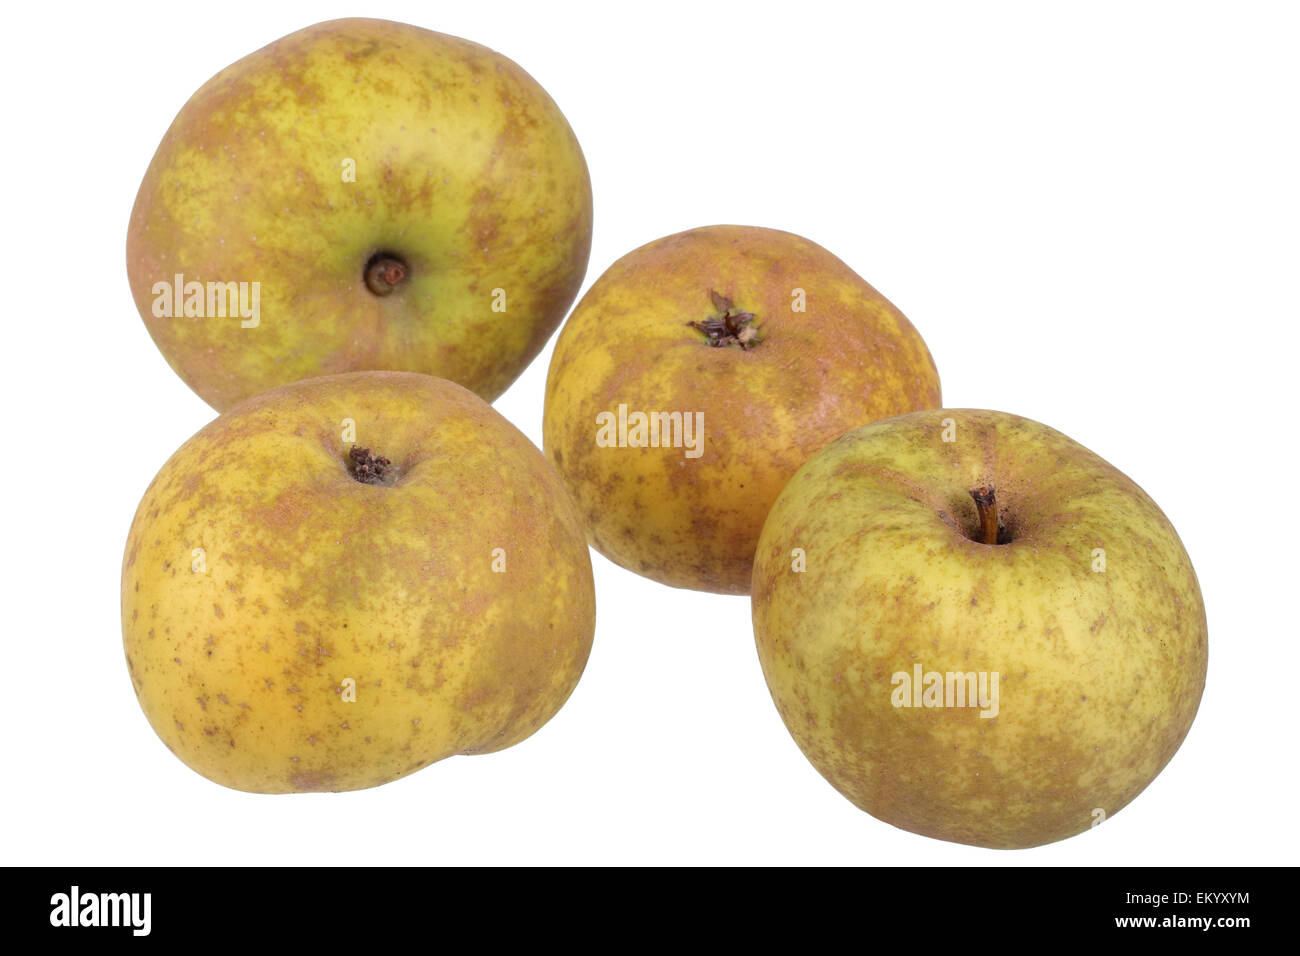 Apple variety Canada Reinette Stock Photo